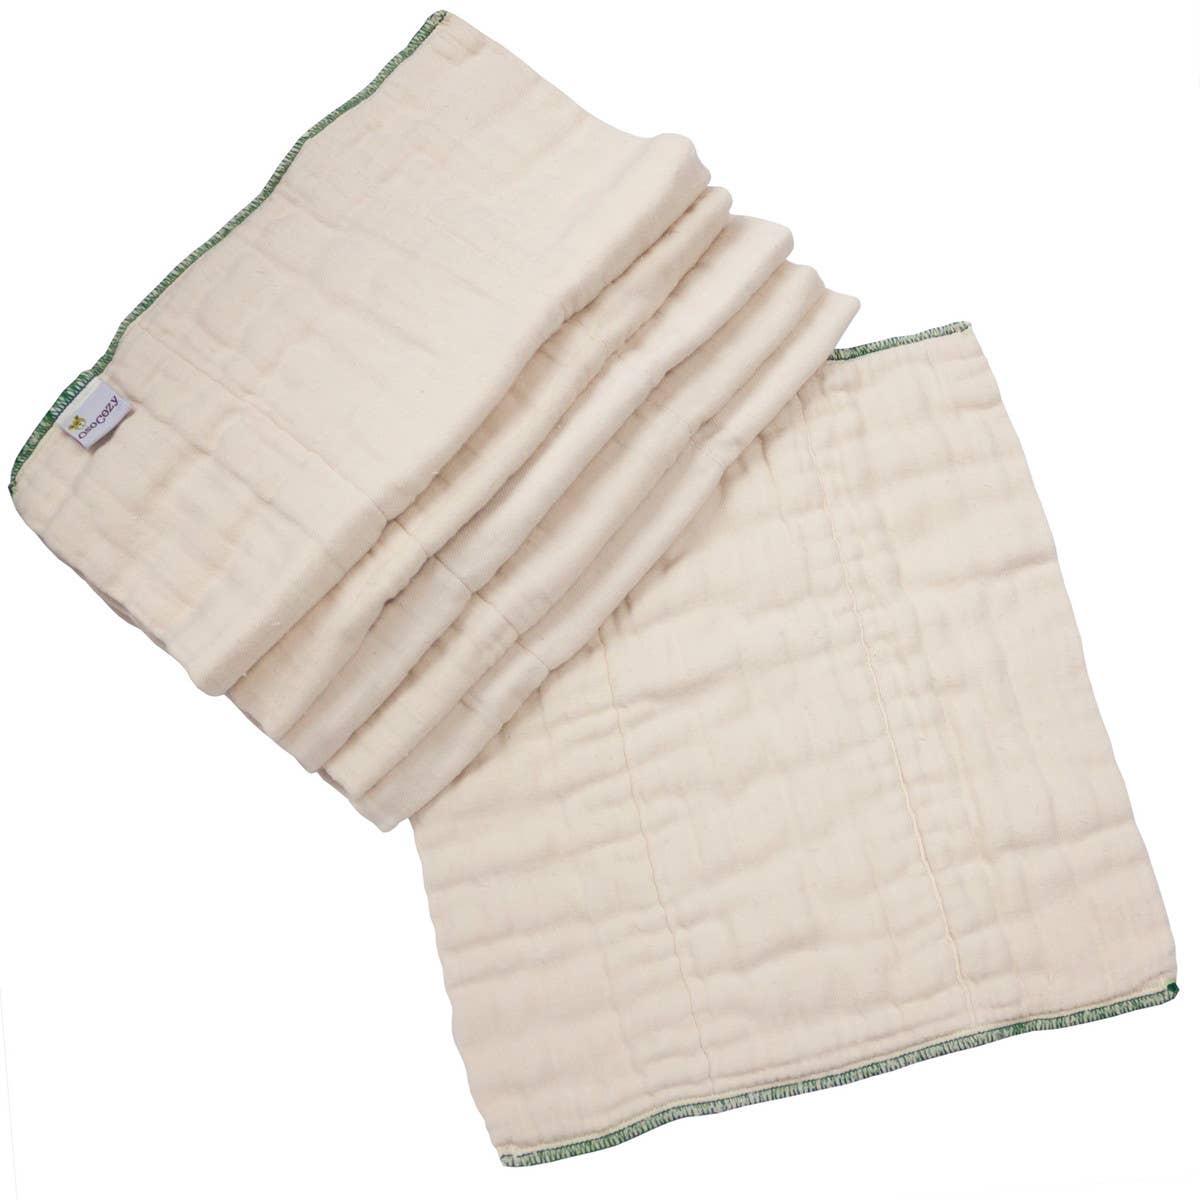 OsoCozy Organic Cotton Prefold Cloth Diapers - 6 packs